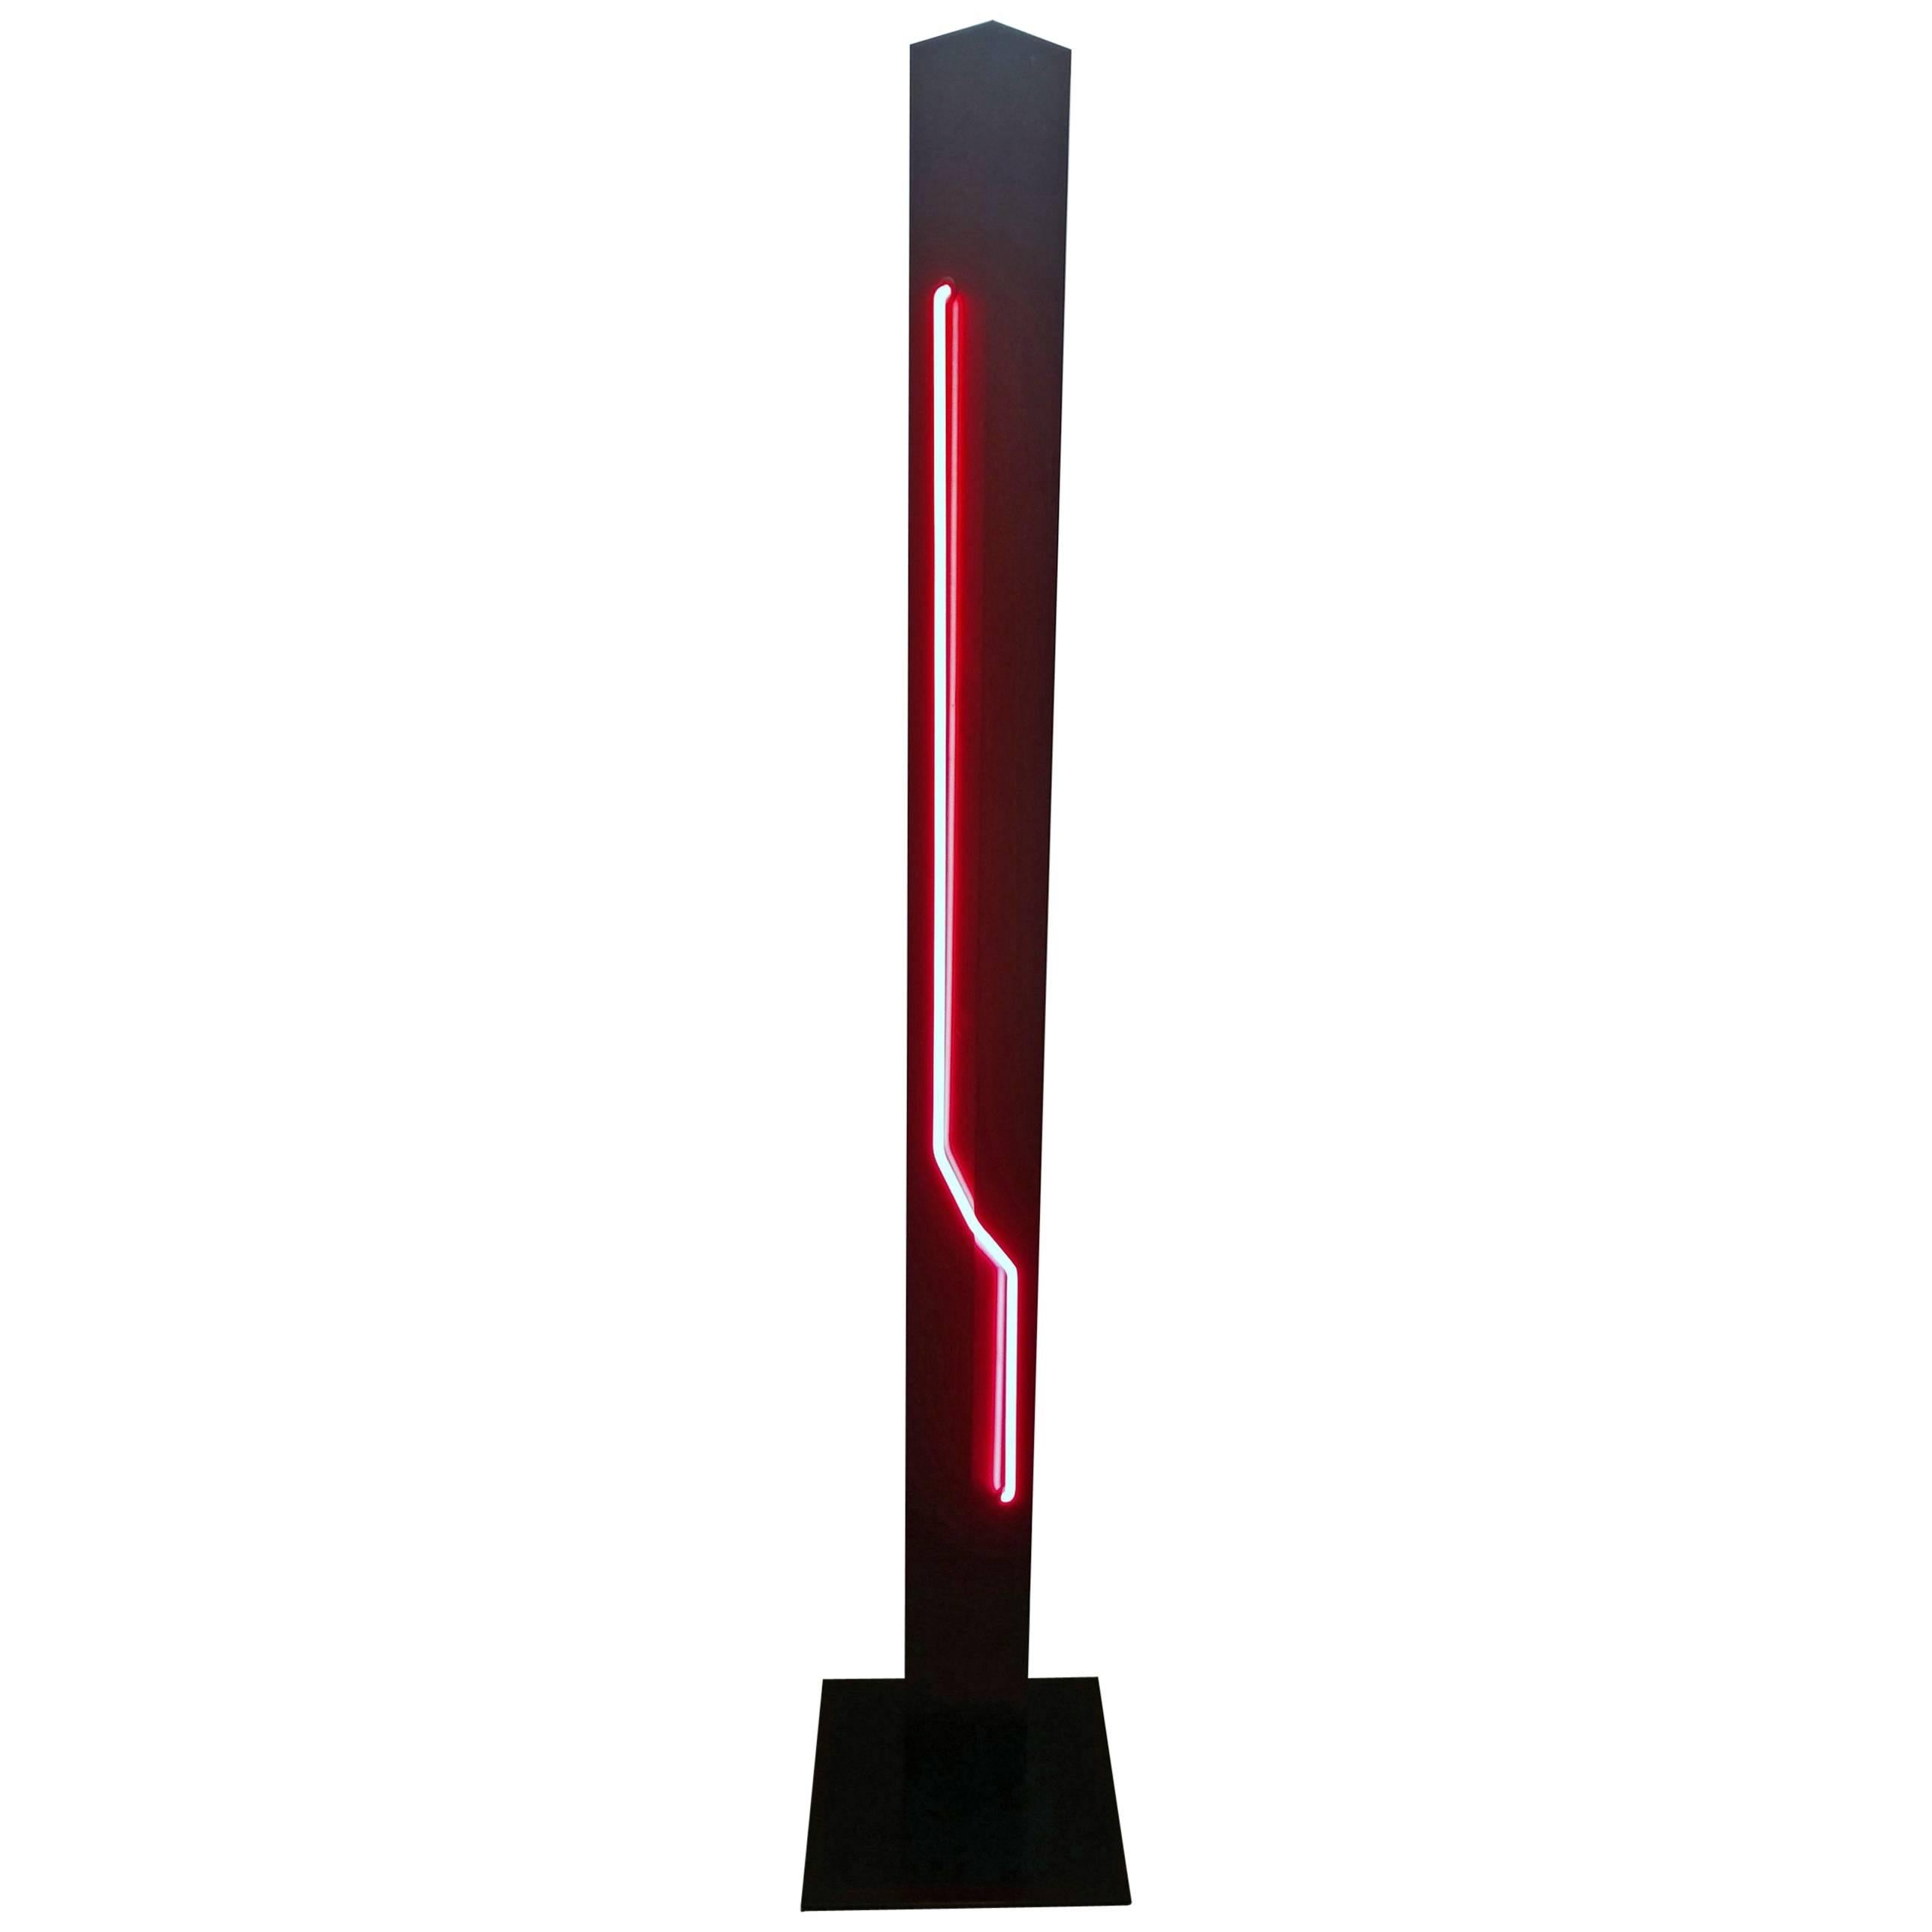 Neon Sculpture Torchiere Floor Lamp by Rudi Stern, Offered by La Porte